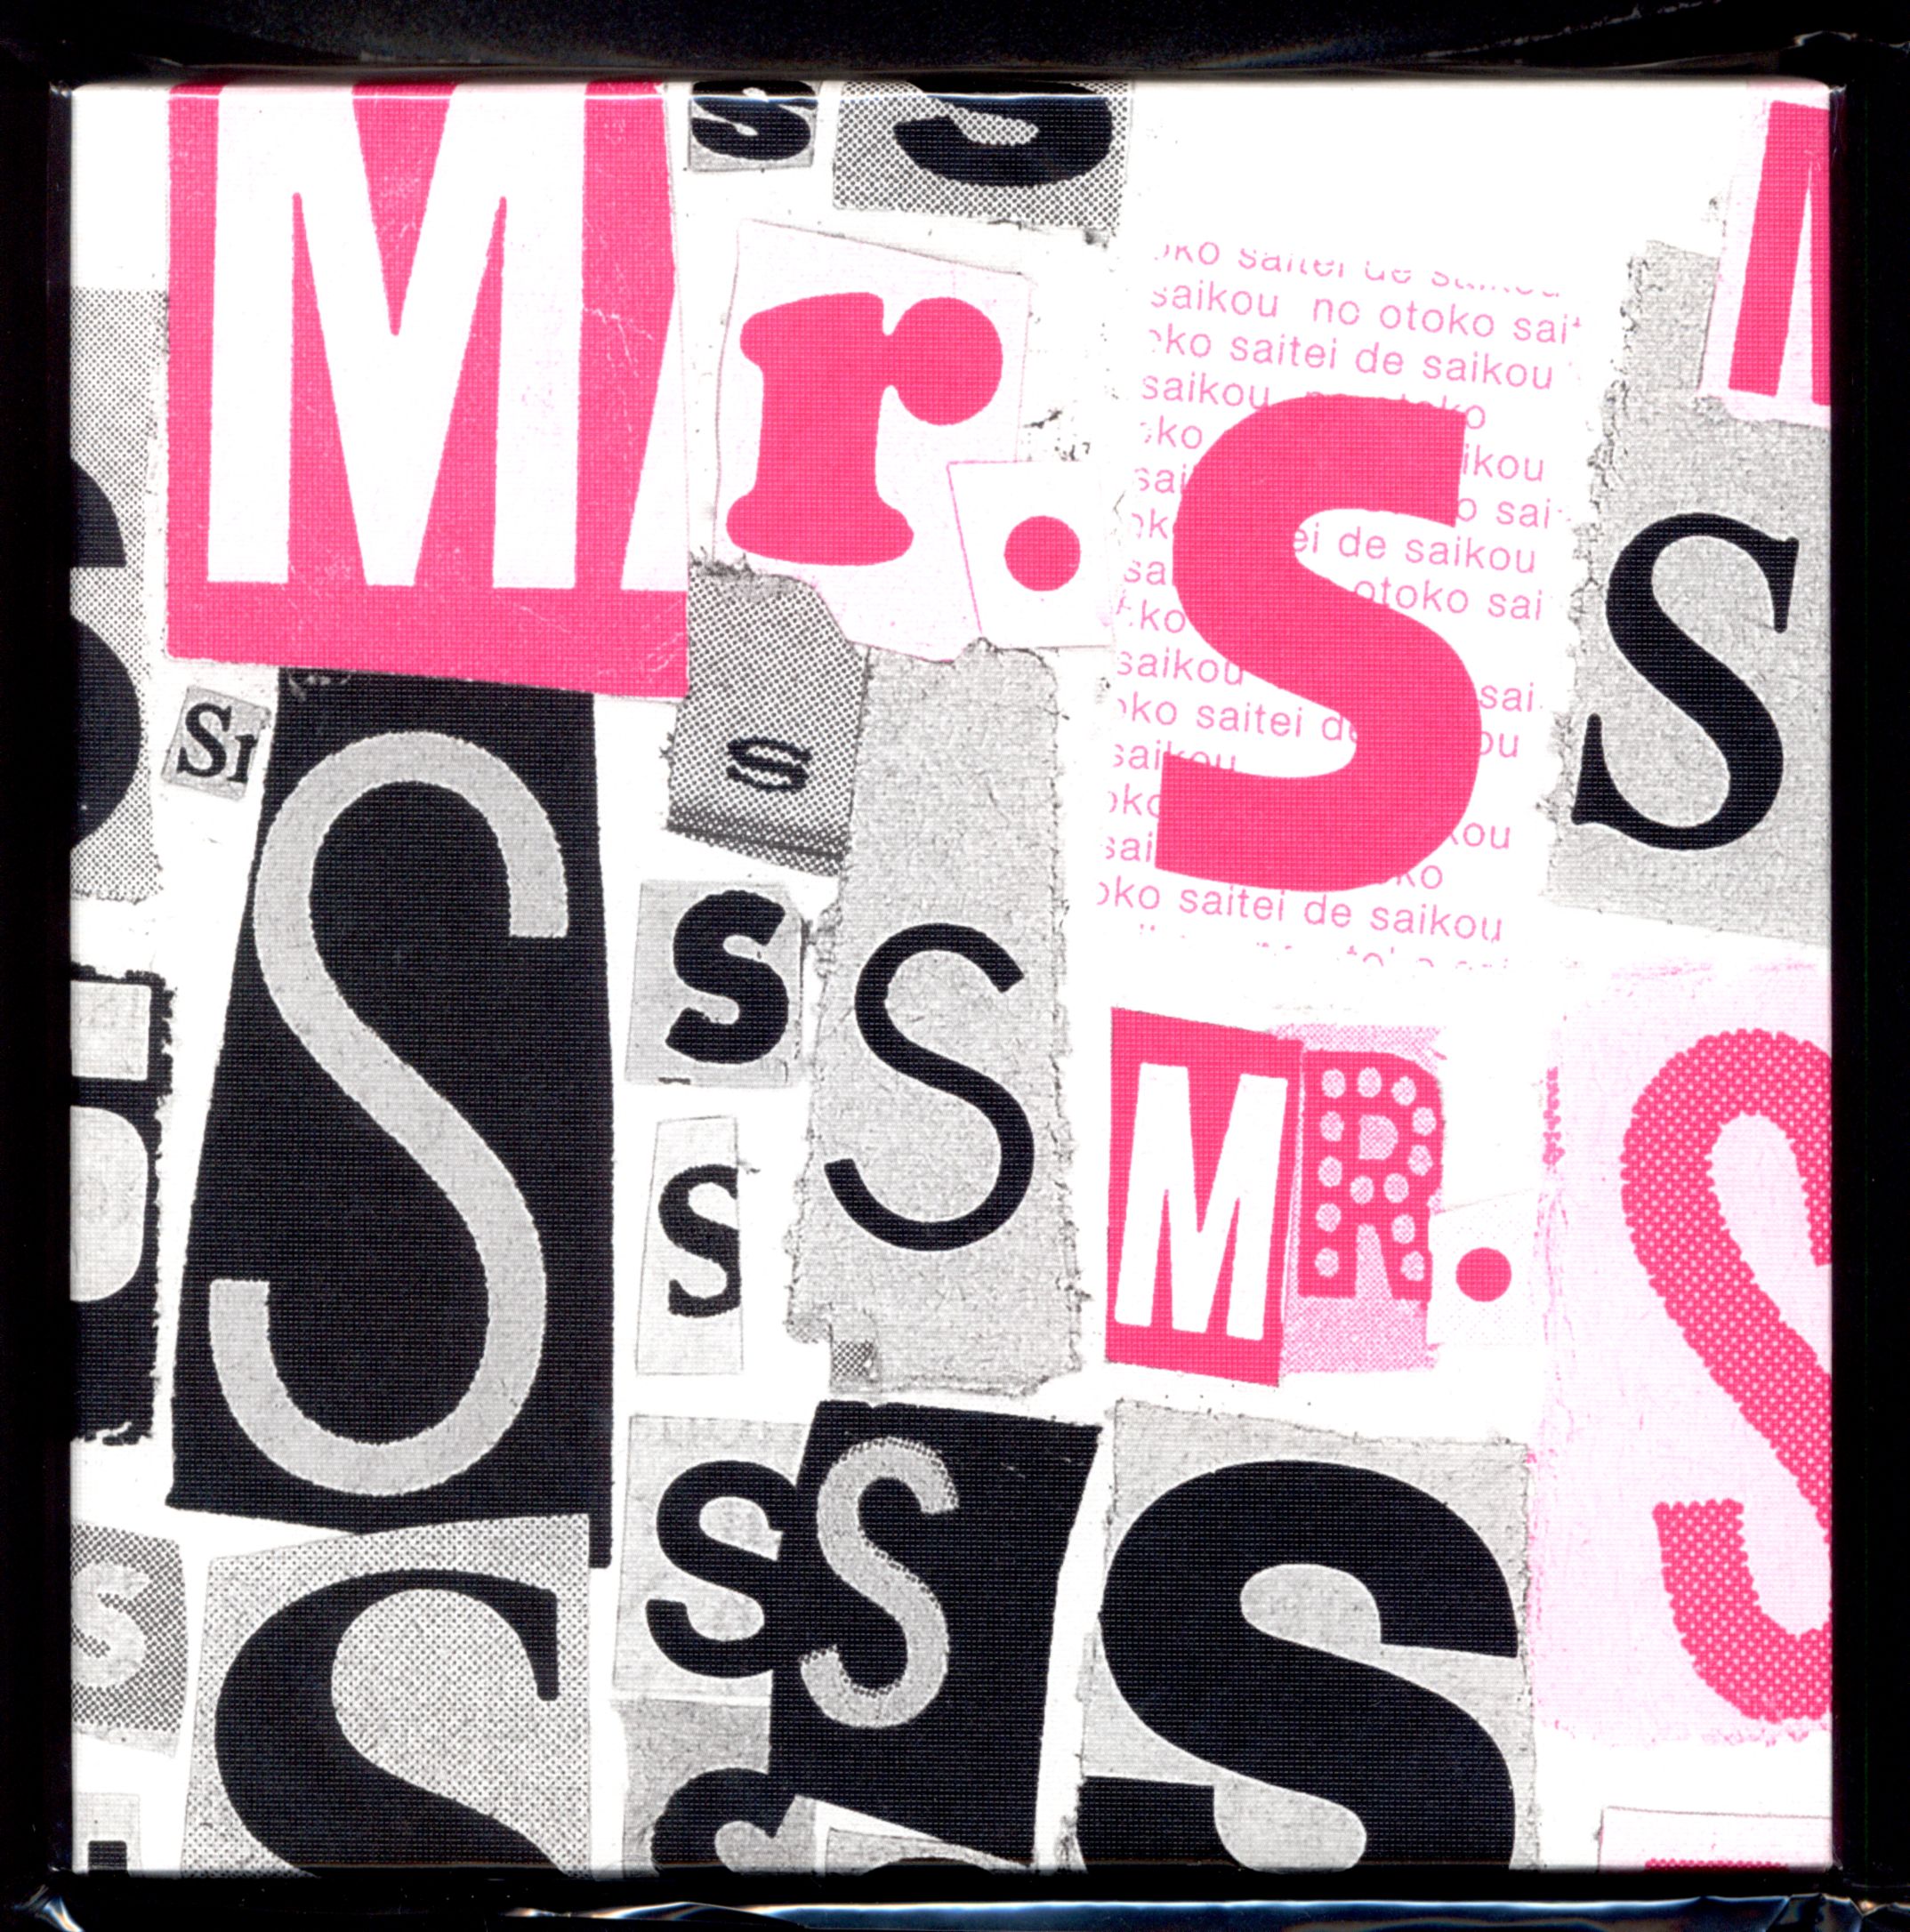 SMAP　Mr. S 初回限定盤